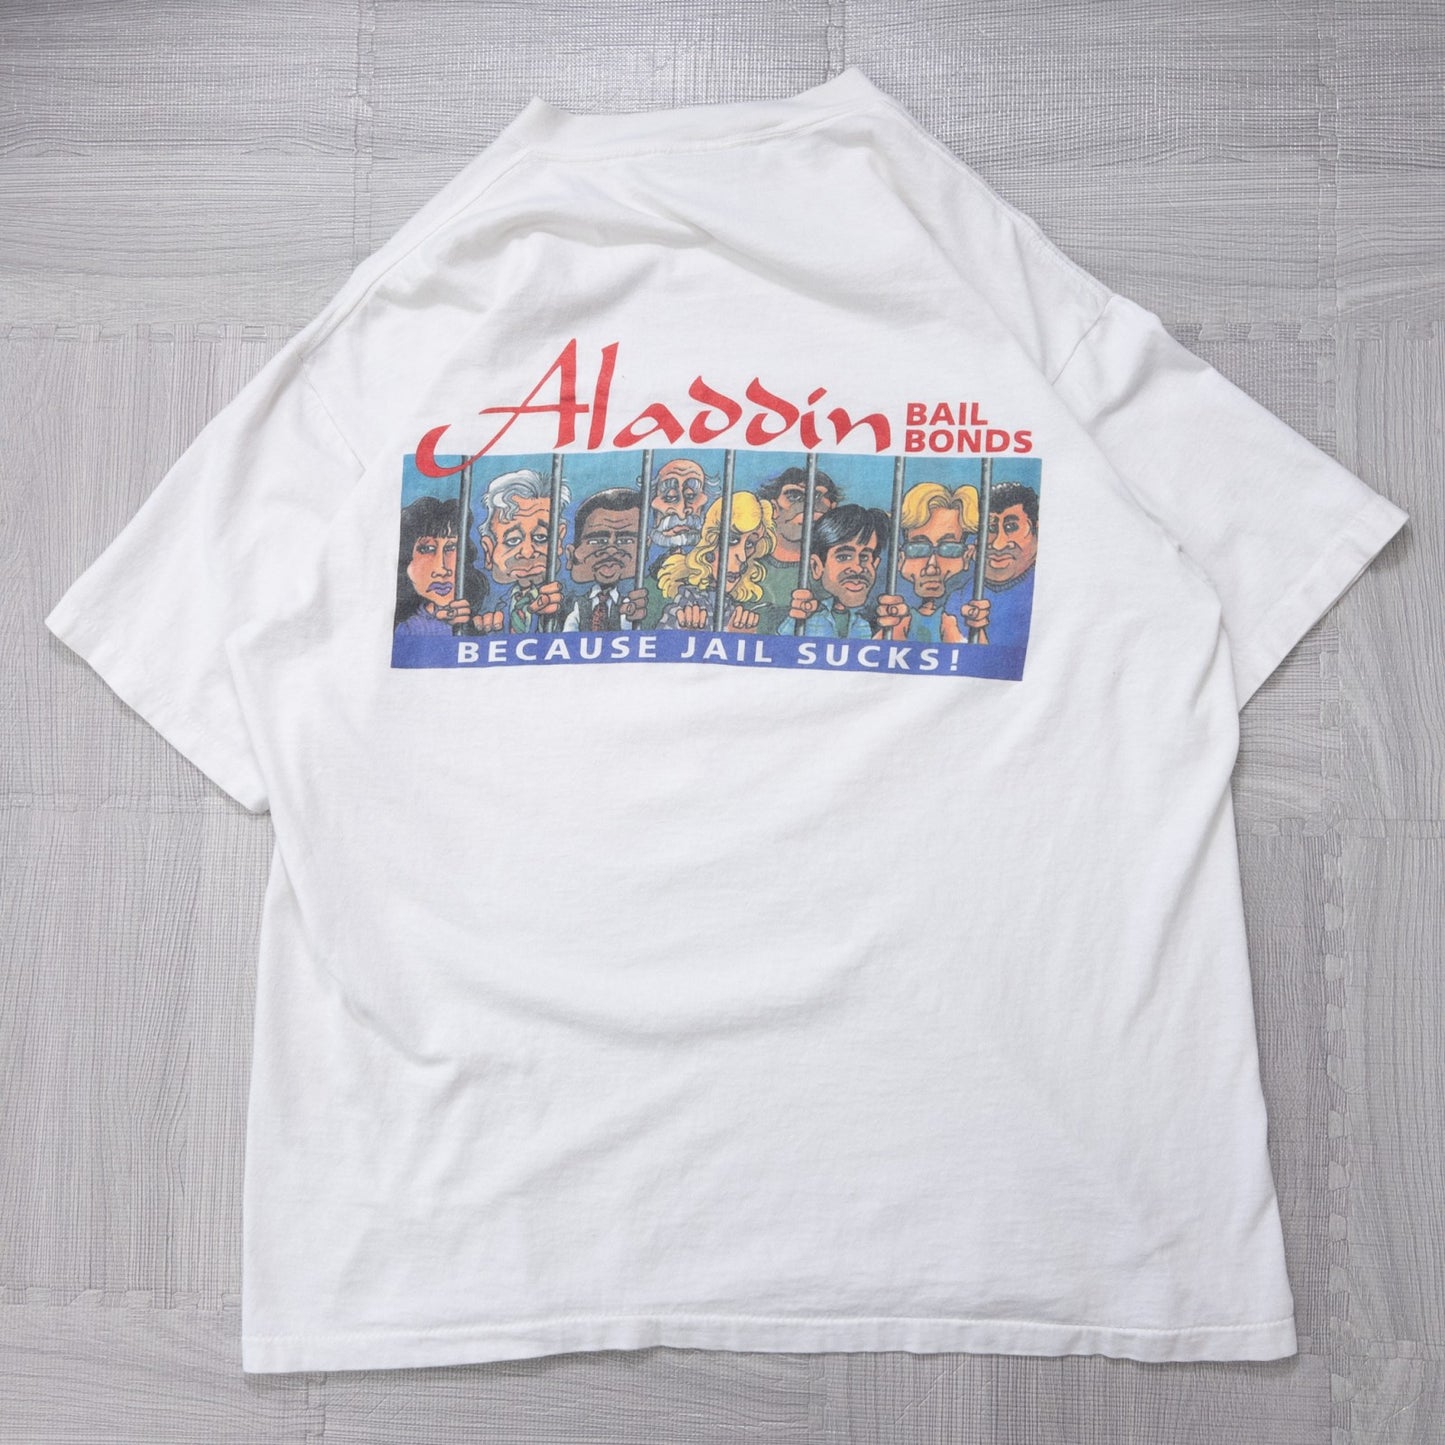 90s “Aladdin BAIL BONDS” XL